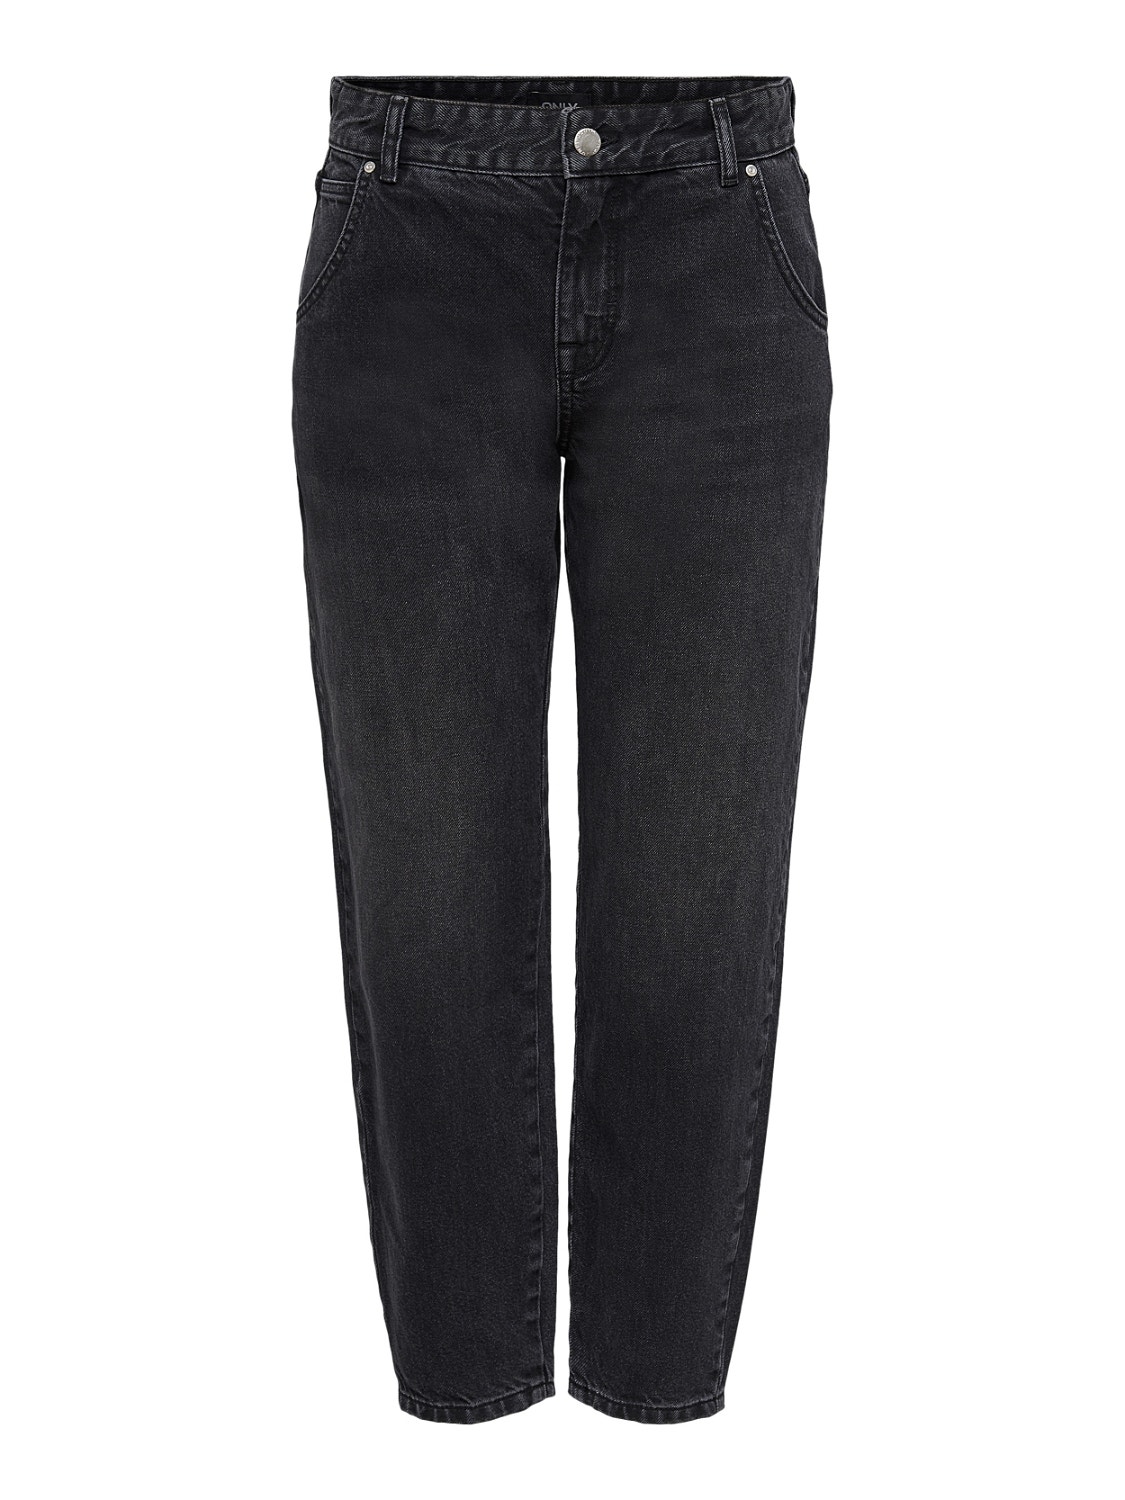 ONLY Carrot Fit High waist Jeans -Black Denim - 15236962